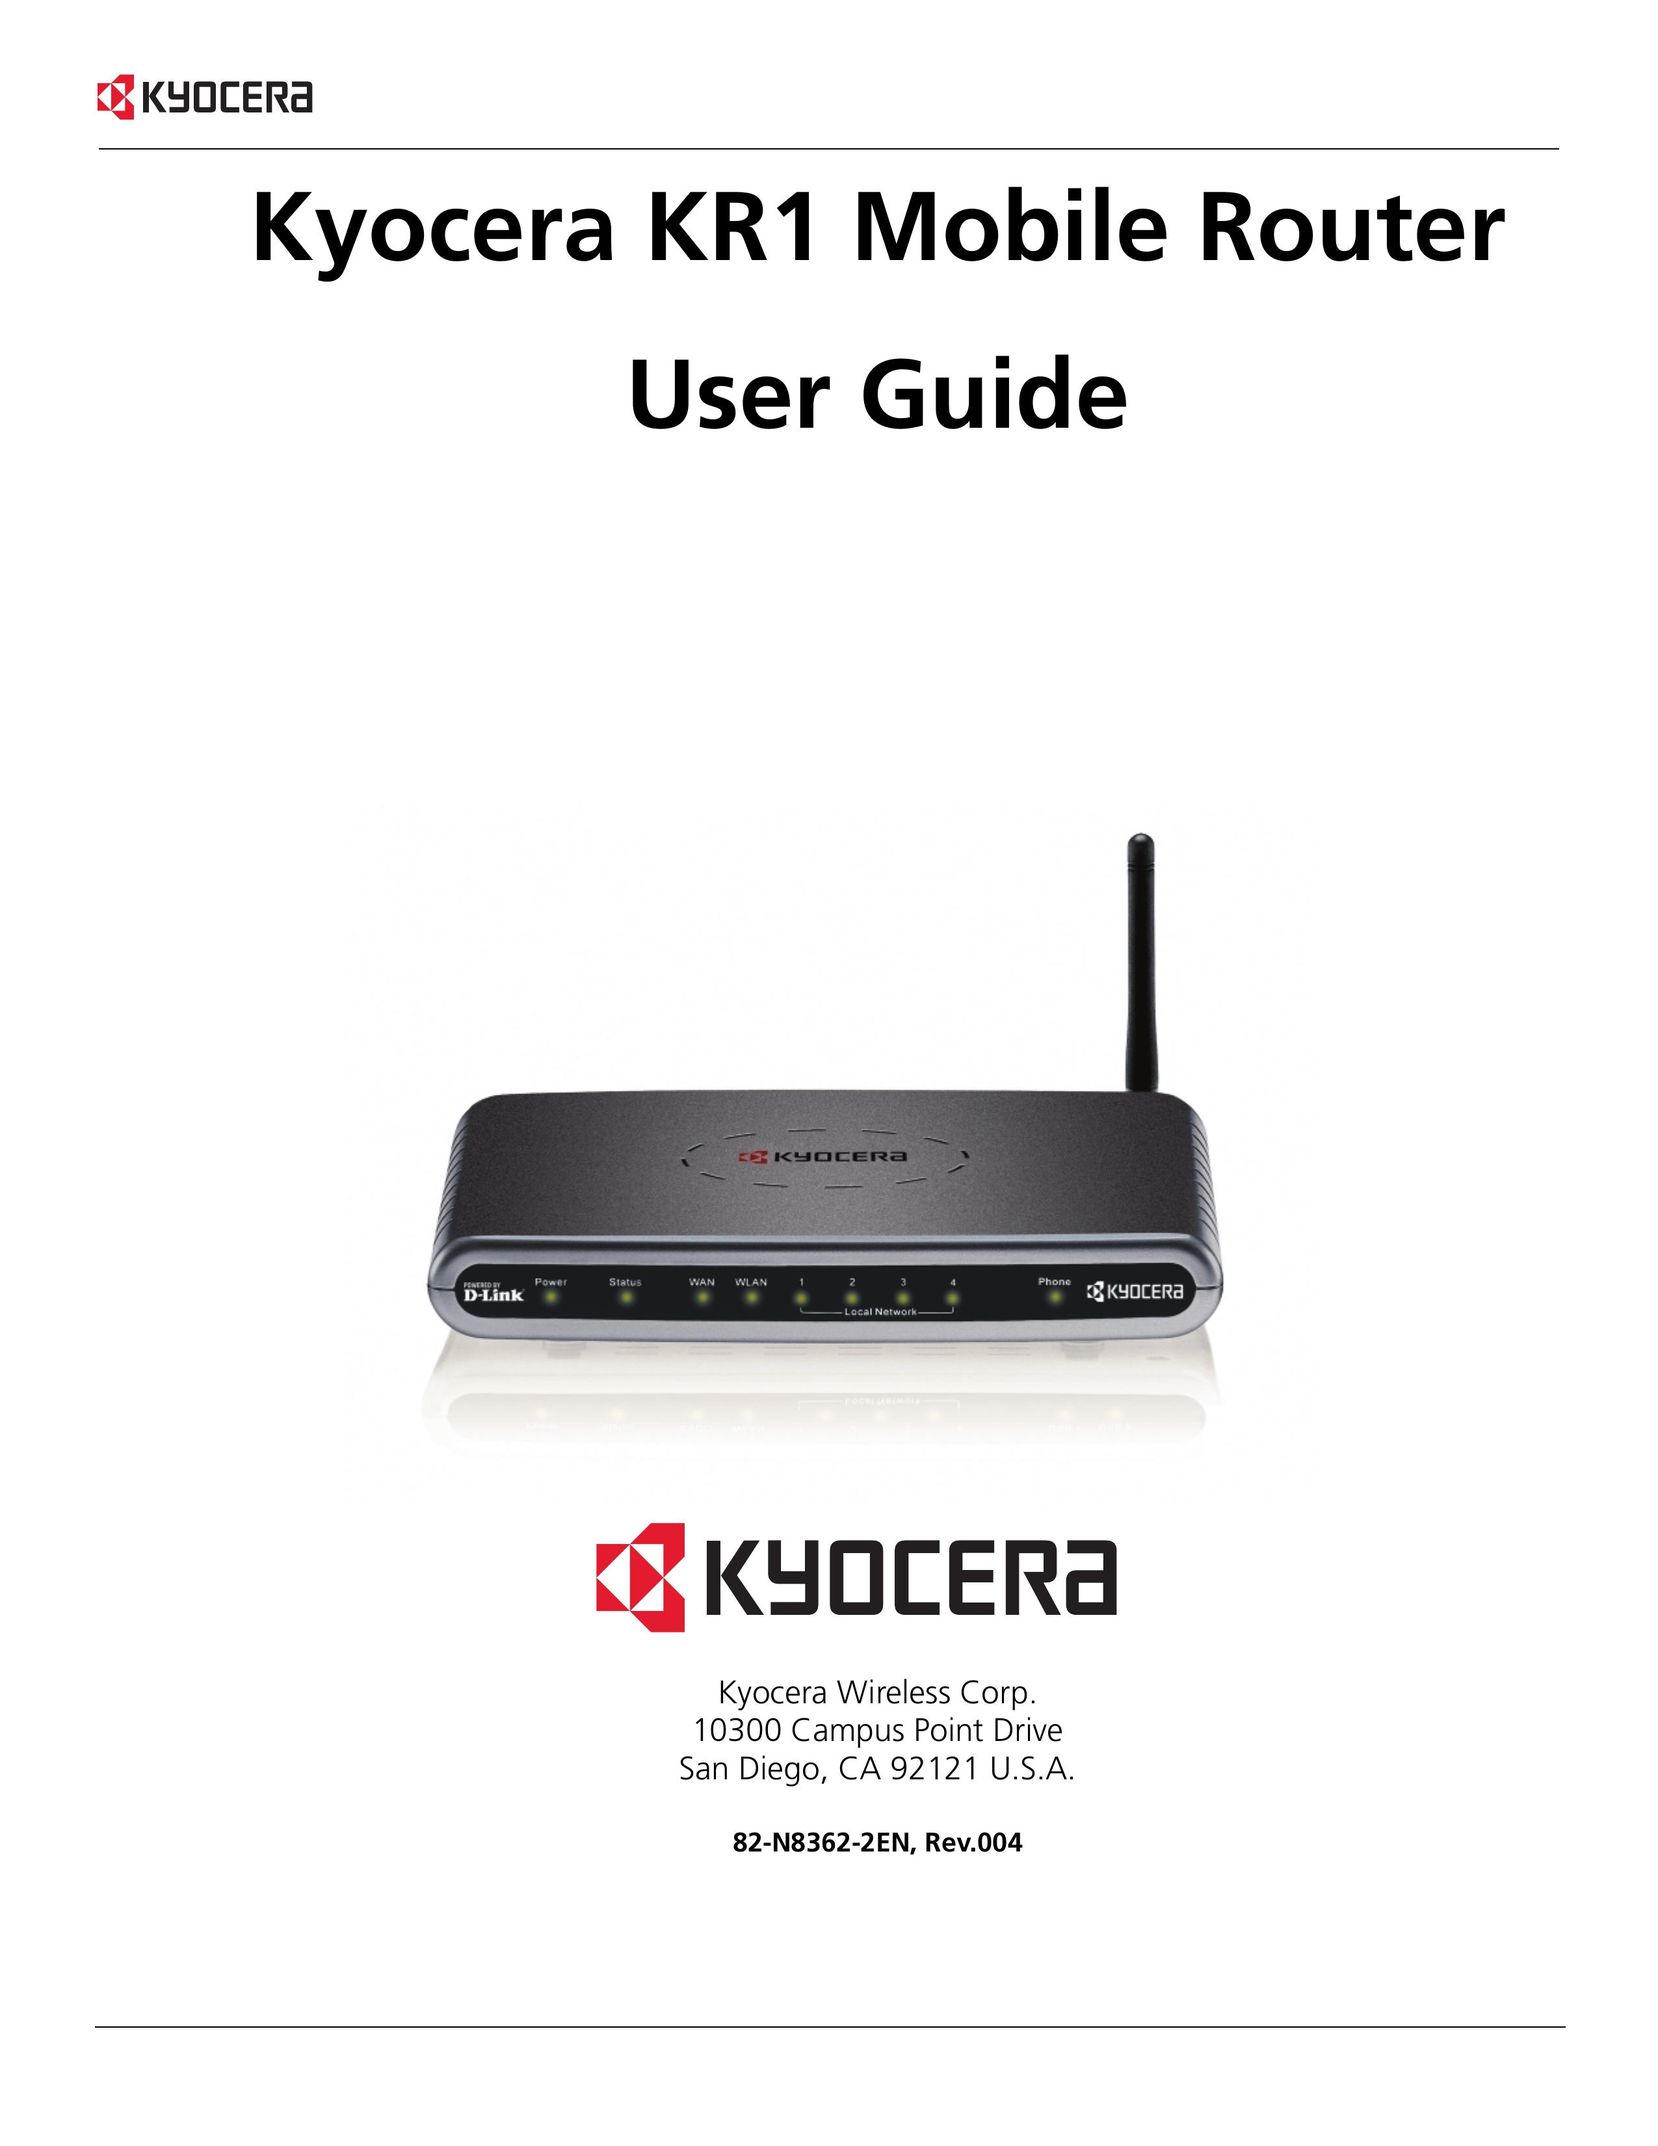 Kyocera KR1 Network Router User Manual